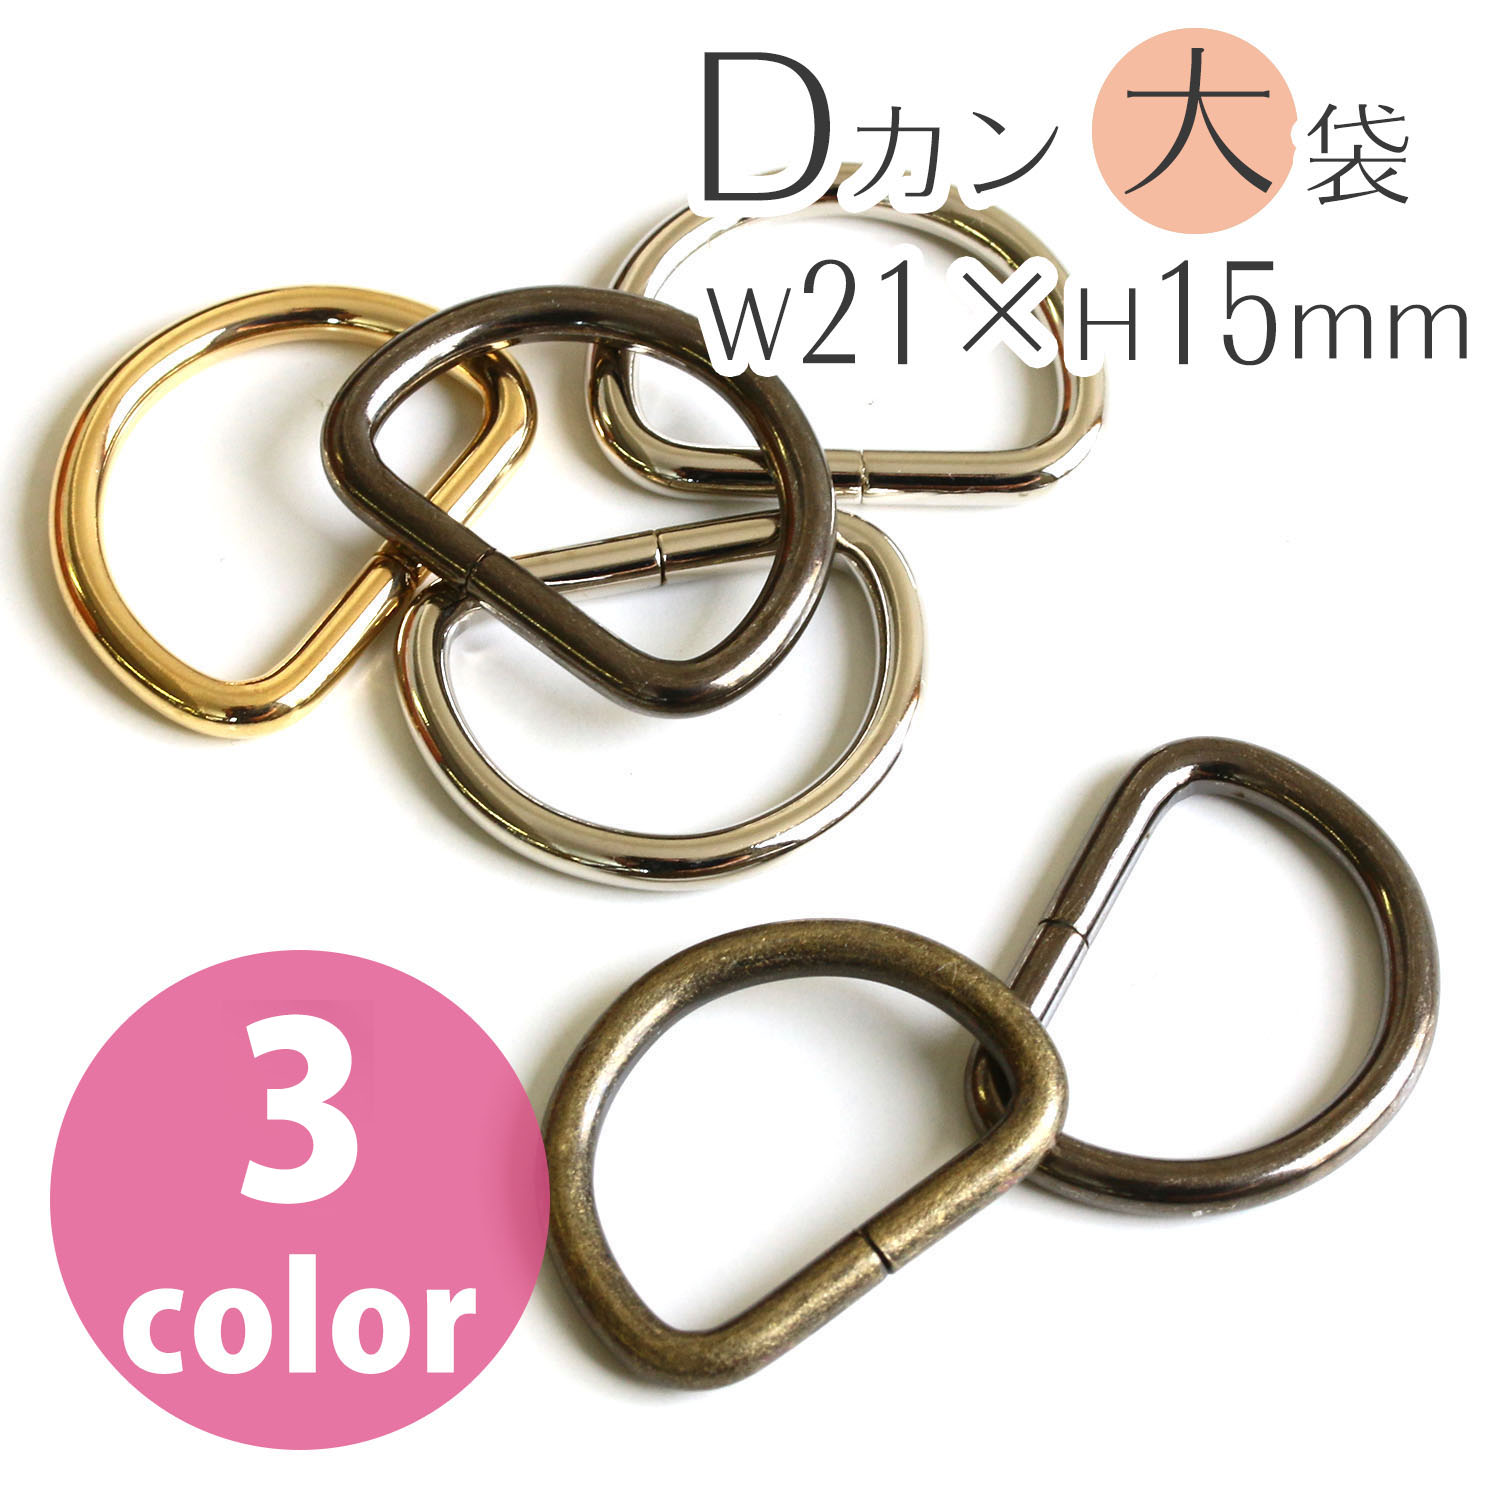 D-Ring 21 x 15mm, diameter 3mm 120pcs (bag)